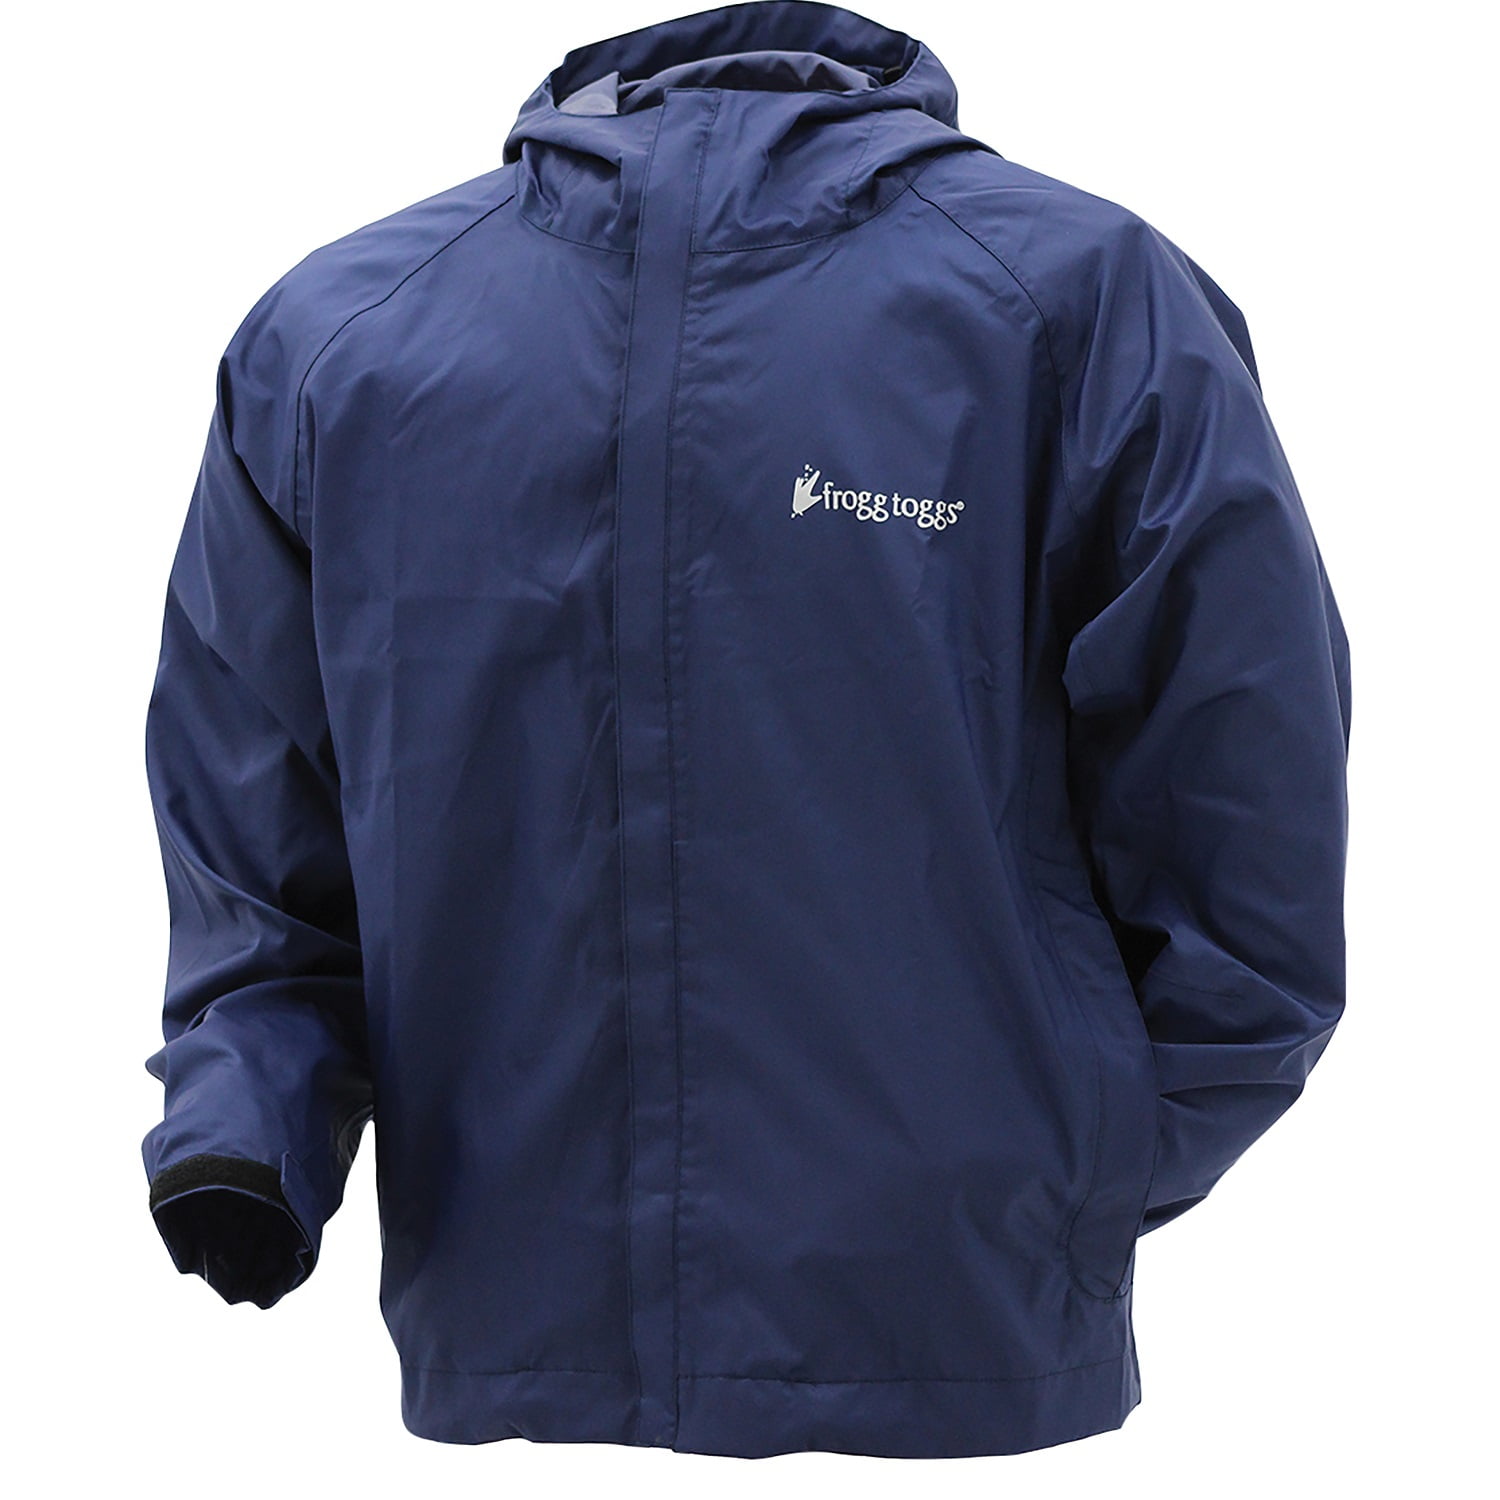 StormWatch Jacket XL Blue - Walmart.com